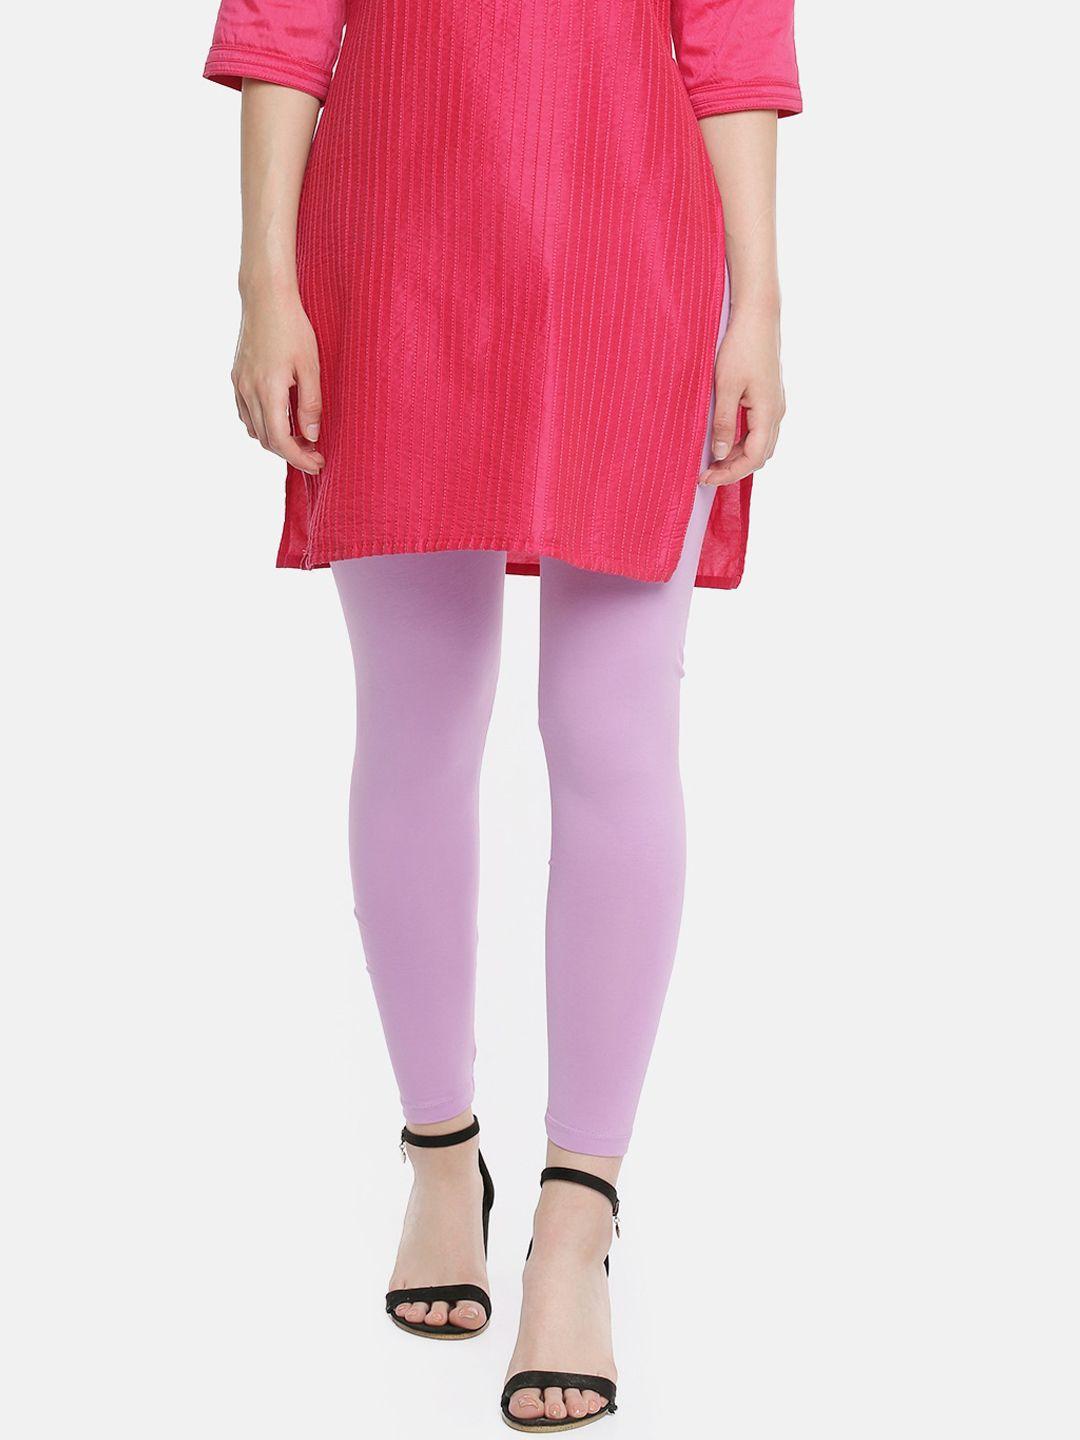 dollar missy women lavender solid ankle-length leggings